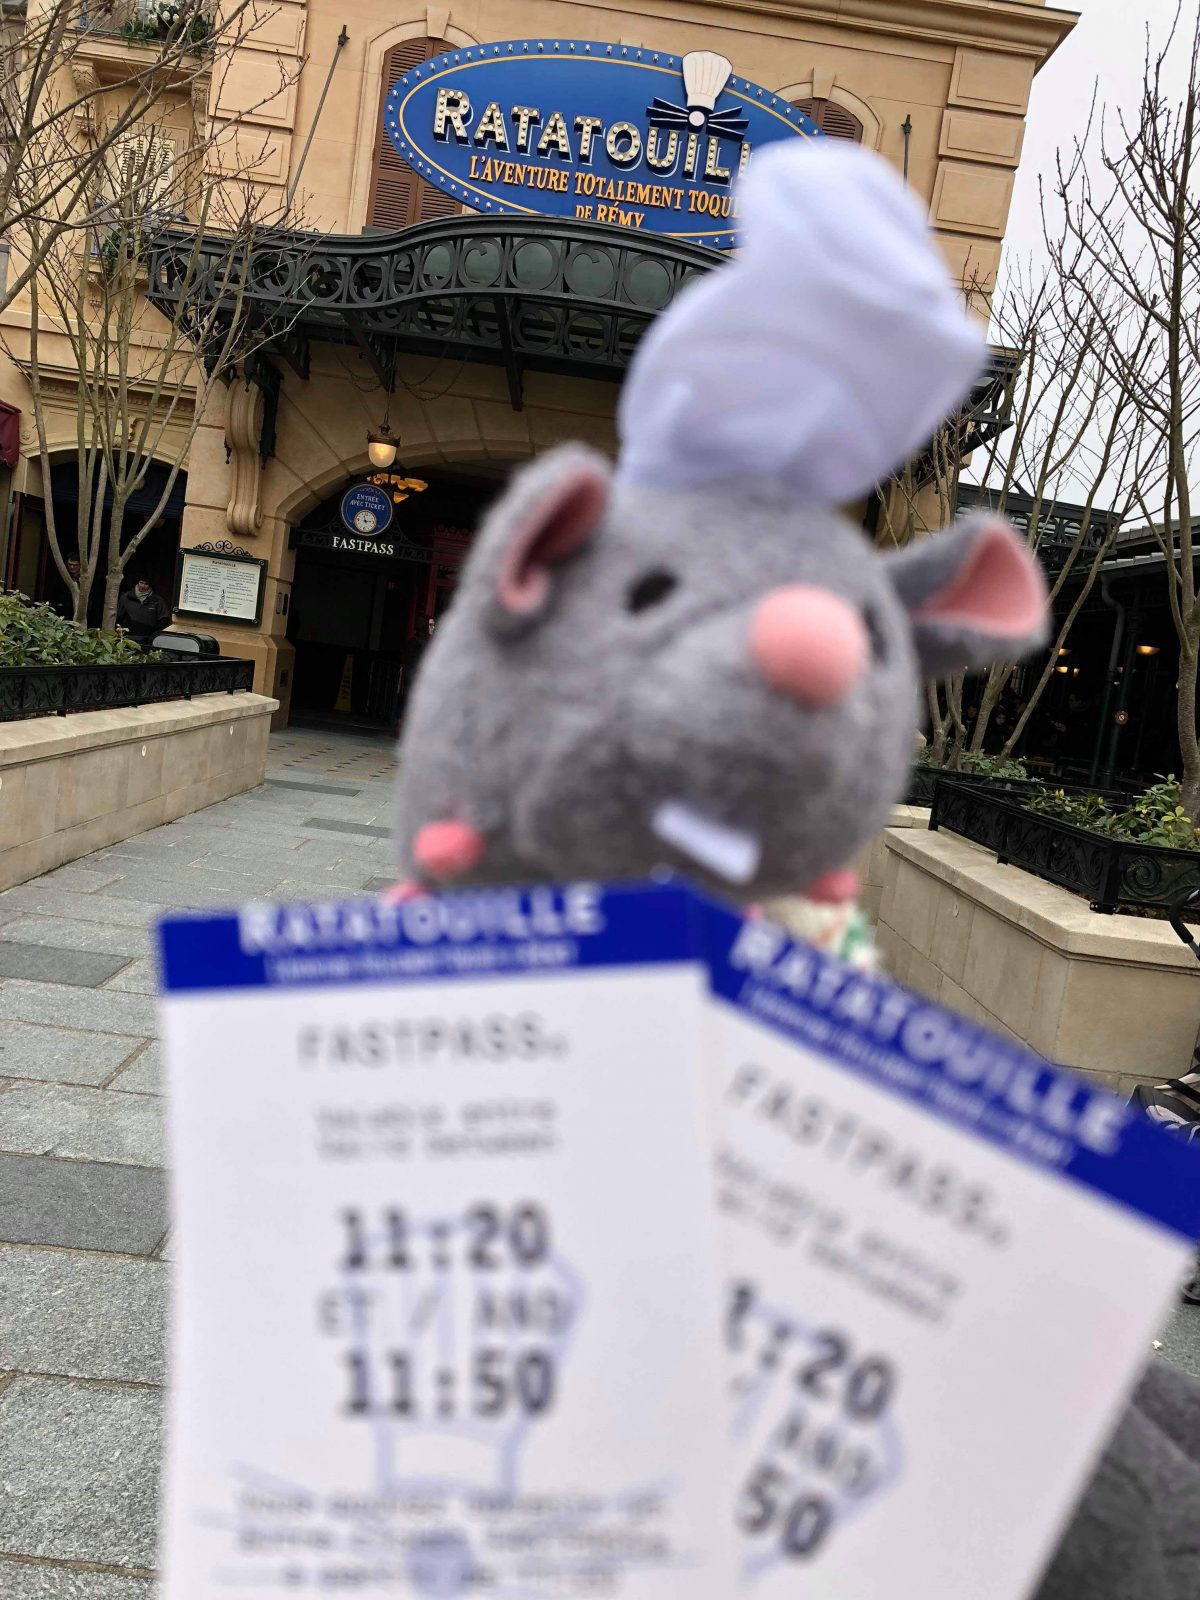 The entrance to the Ratatouille ride at Disneyland Paris